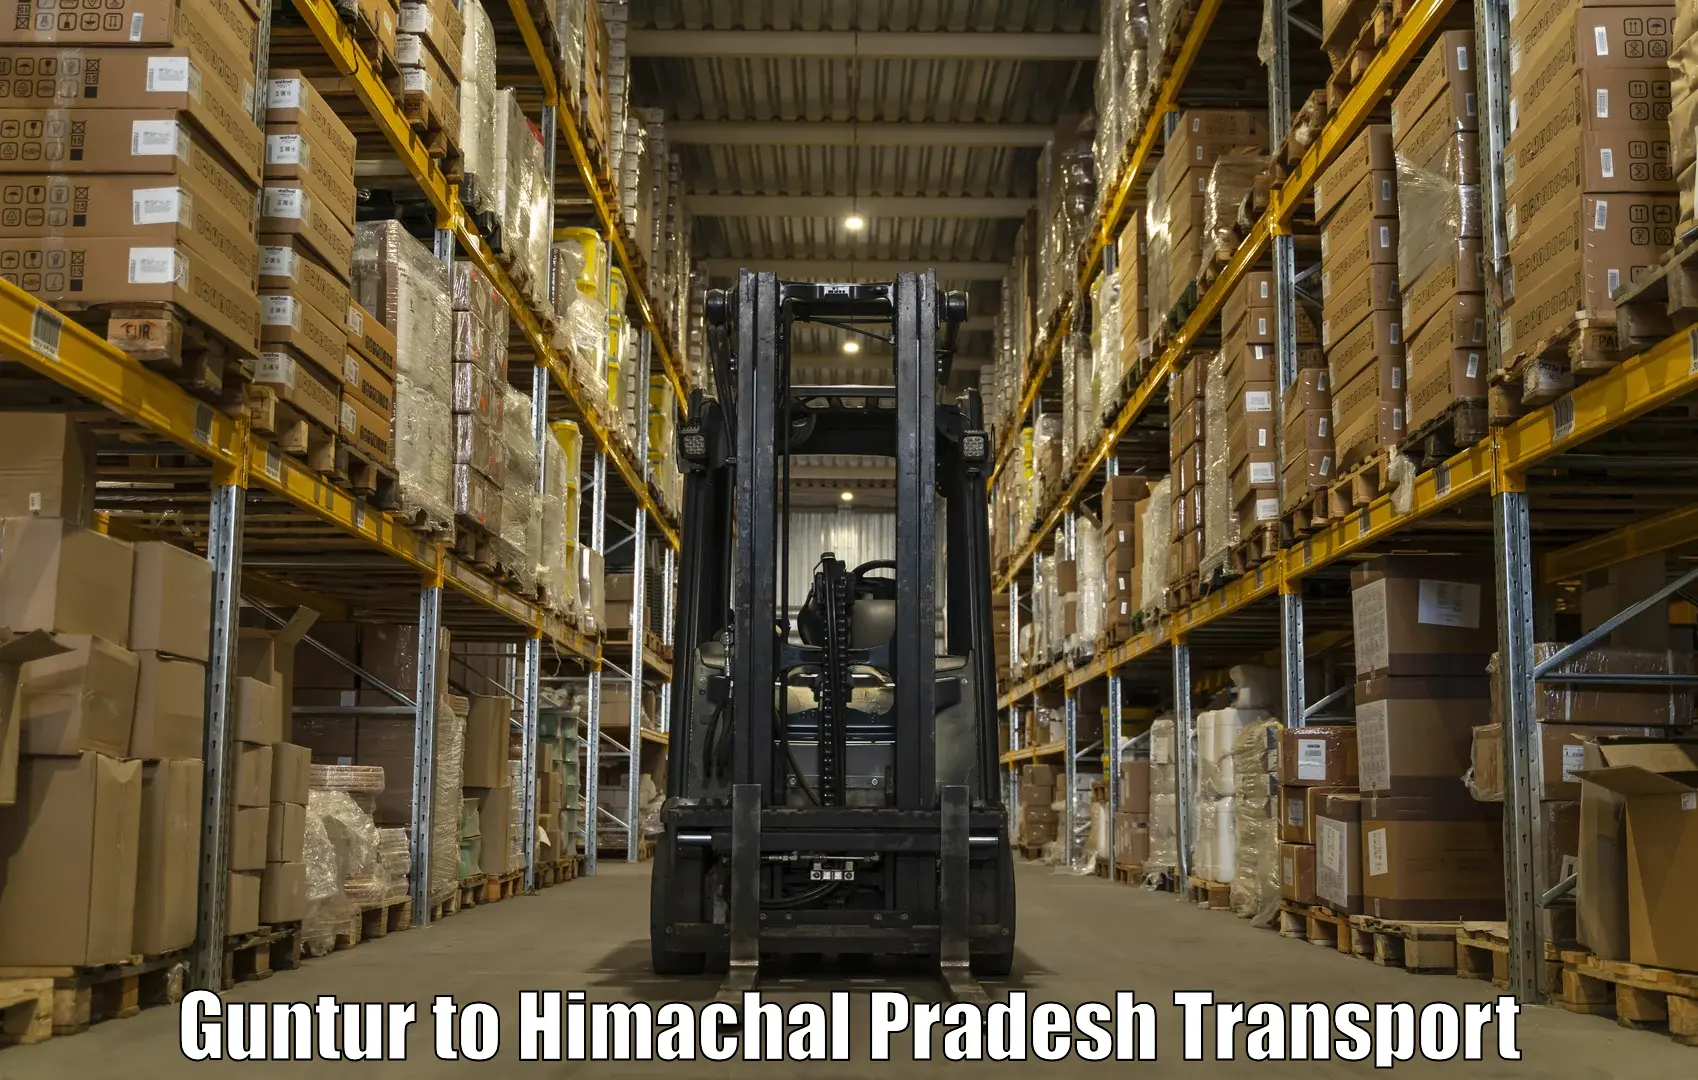 Furniture transport service Guntur to Himachal Pradesh